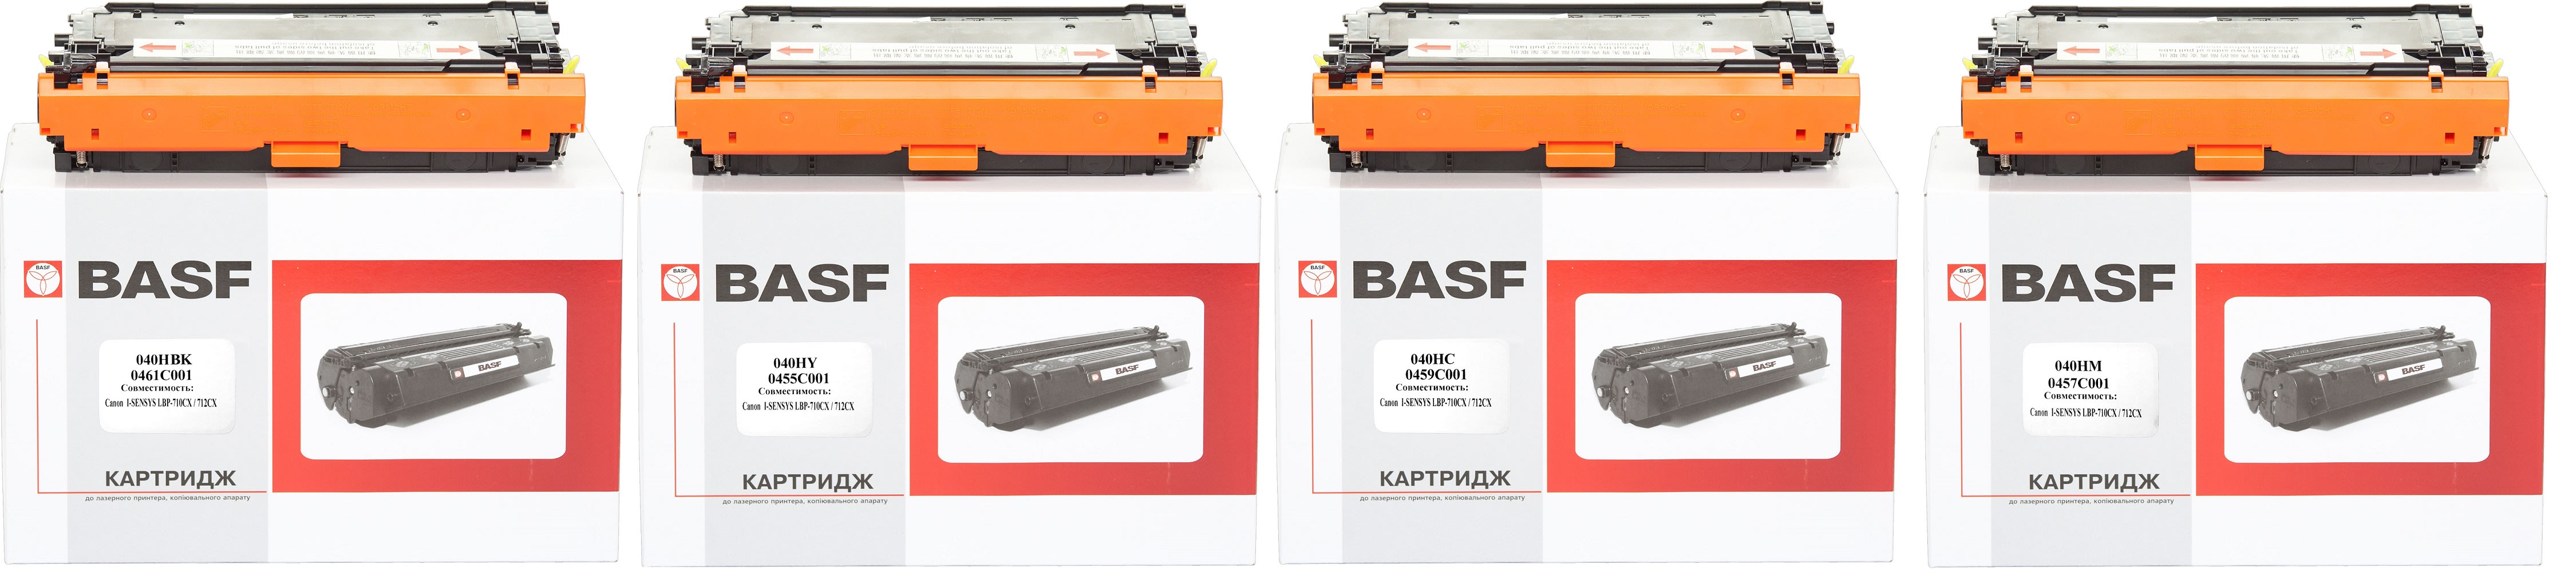 Картриджи BASF-KT-040H для Canon i-Sensys LBP-712cx Купить картриджи.